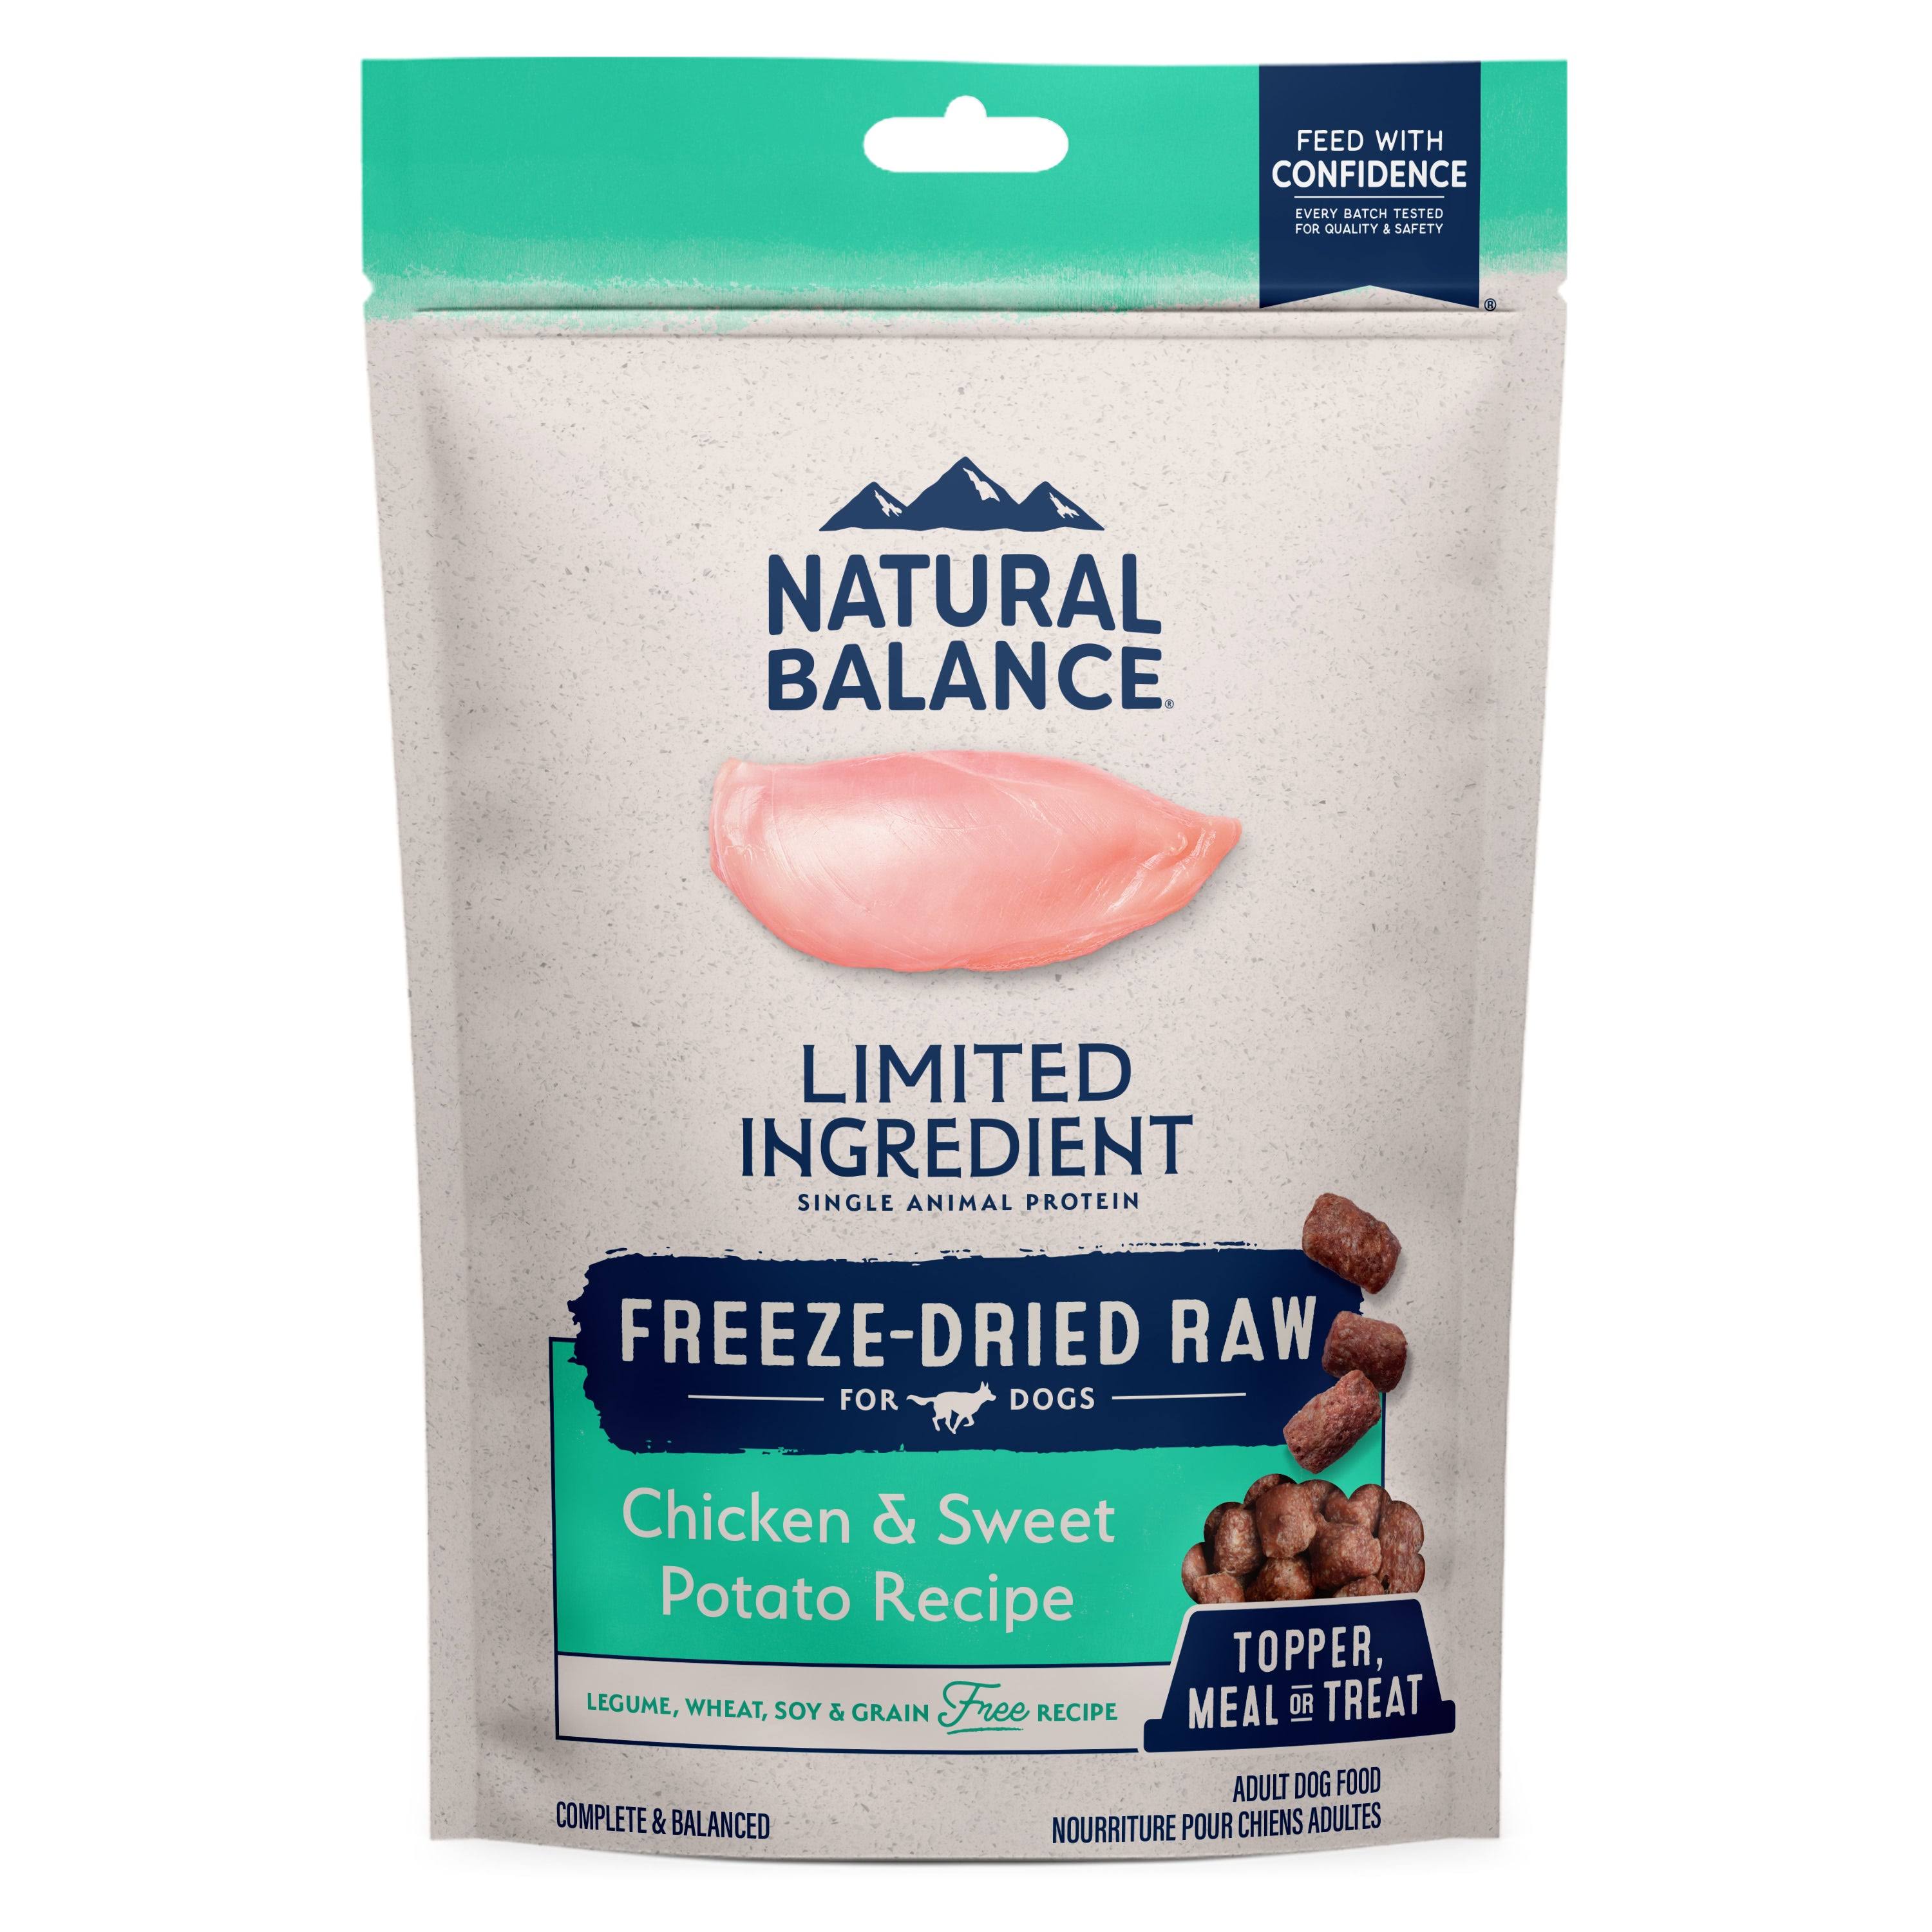 Natural Balance Limited Ingredient Chicken & Sweet Potato Freeze-Dried Raw Dog Food, 6-oz